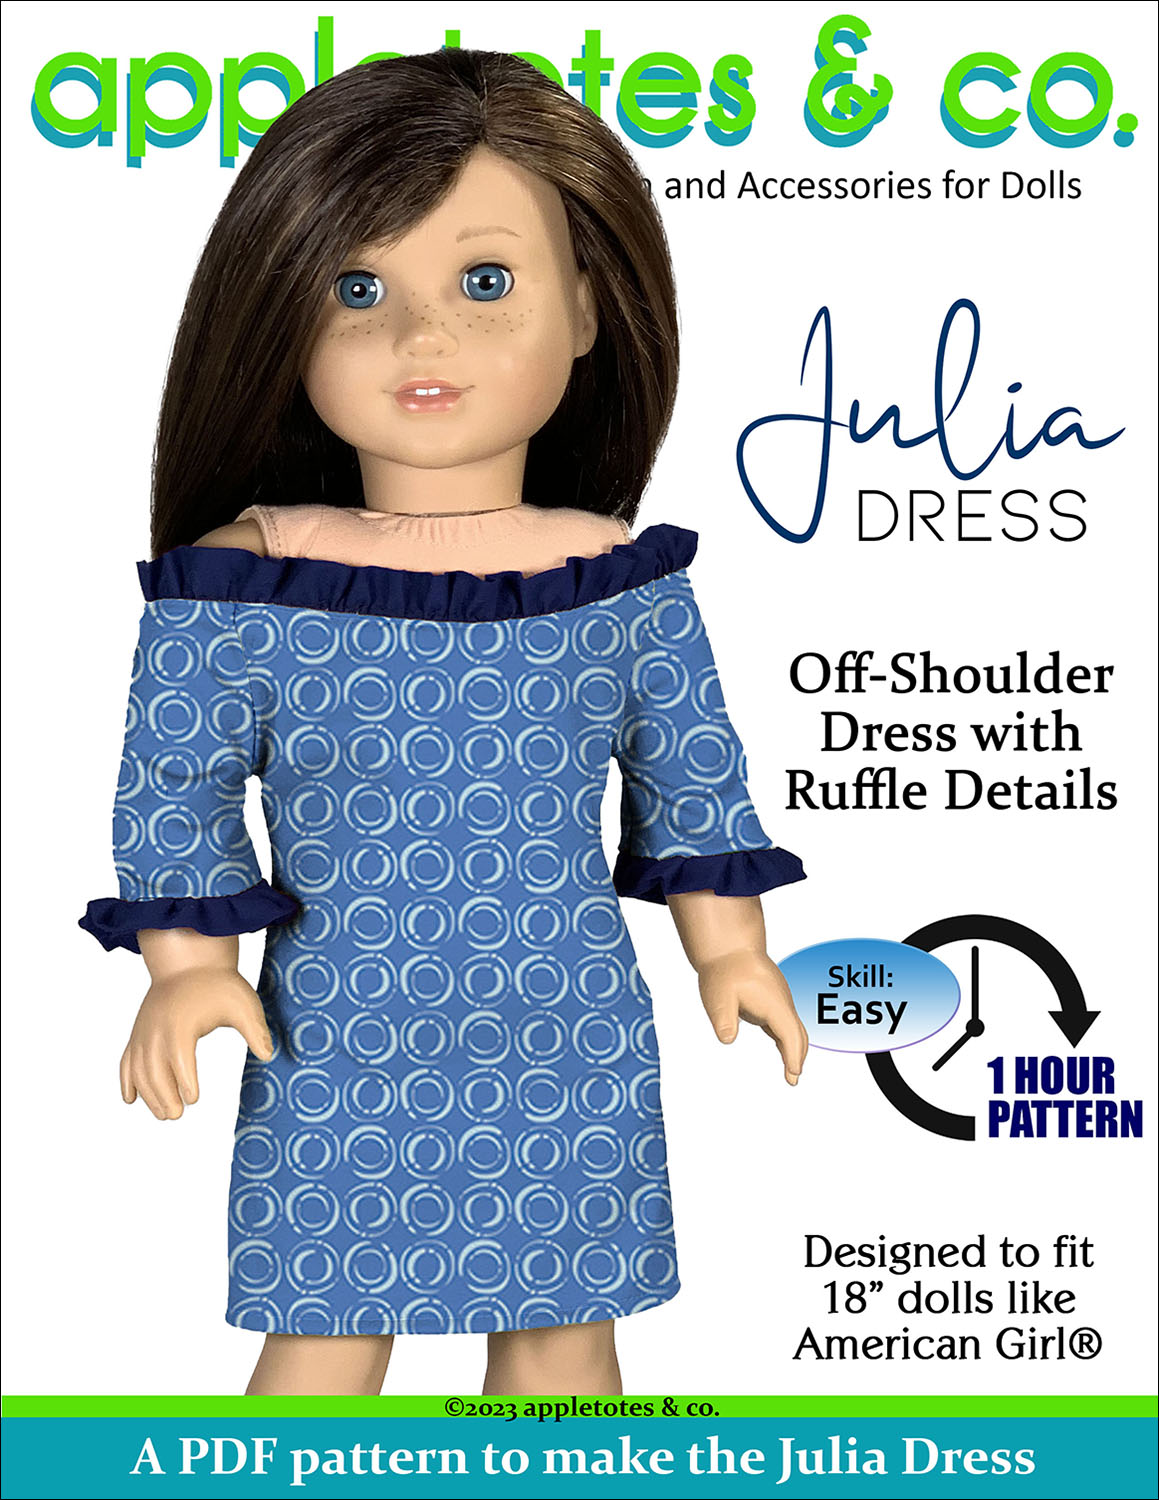 Julia Dress - Women's Collection